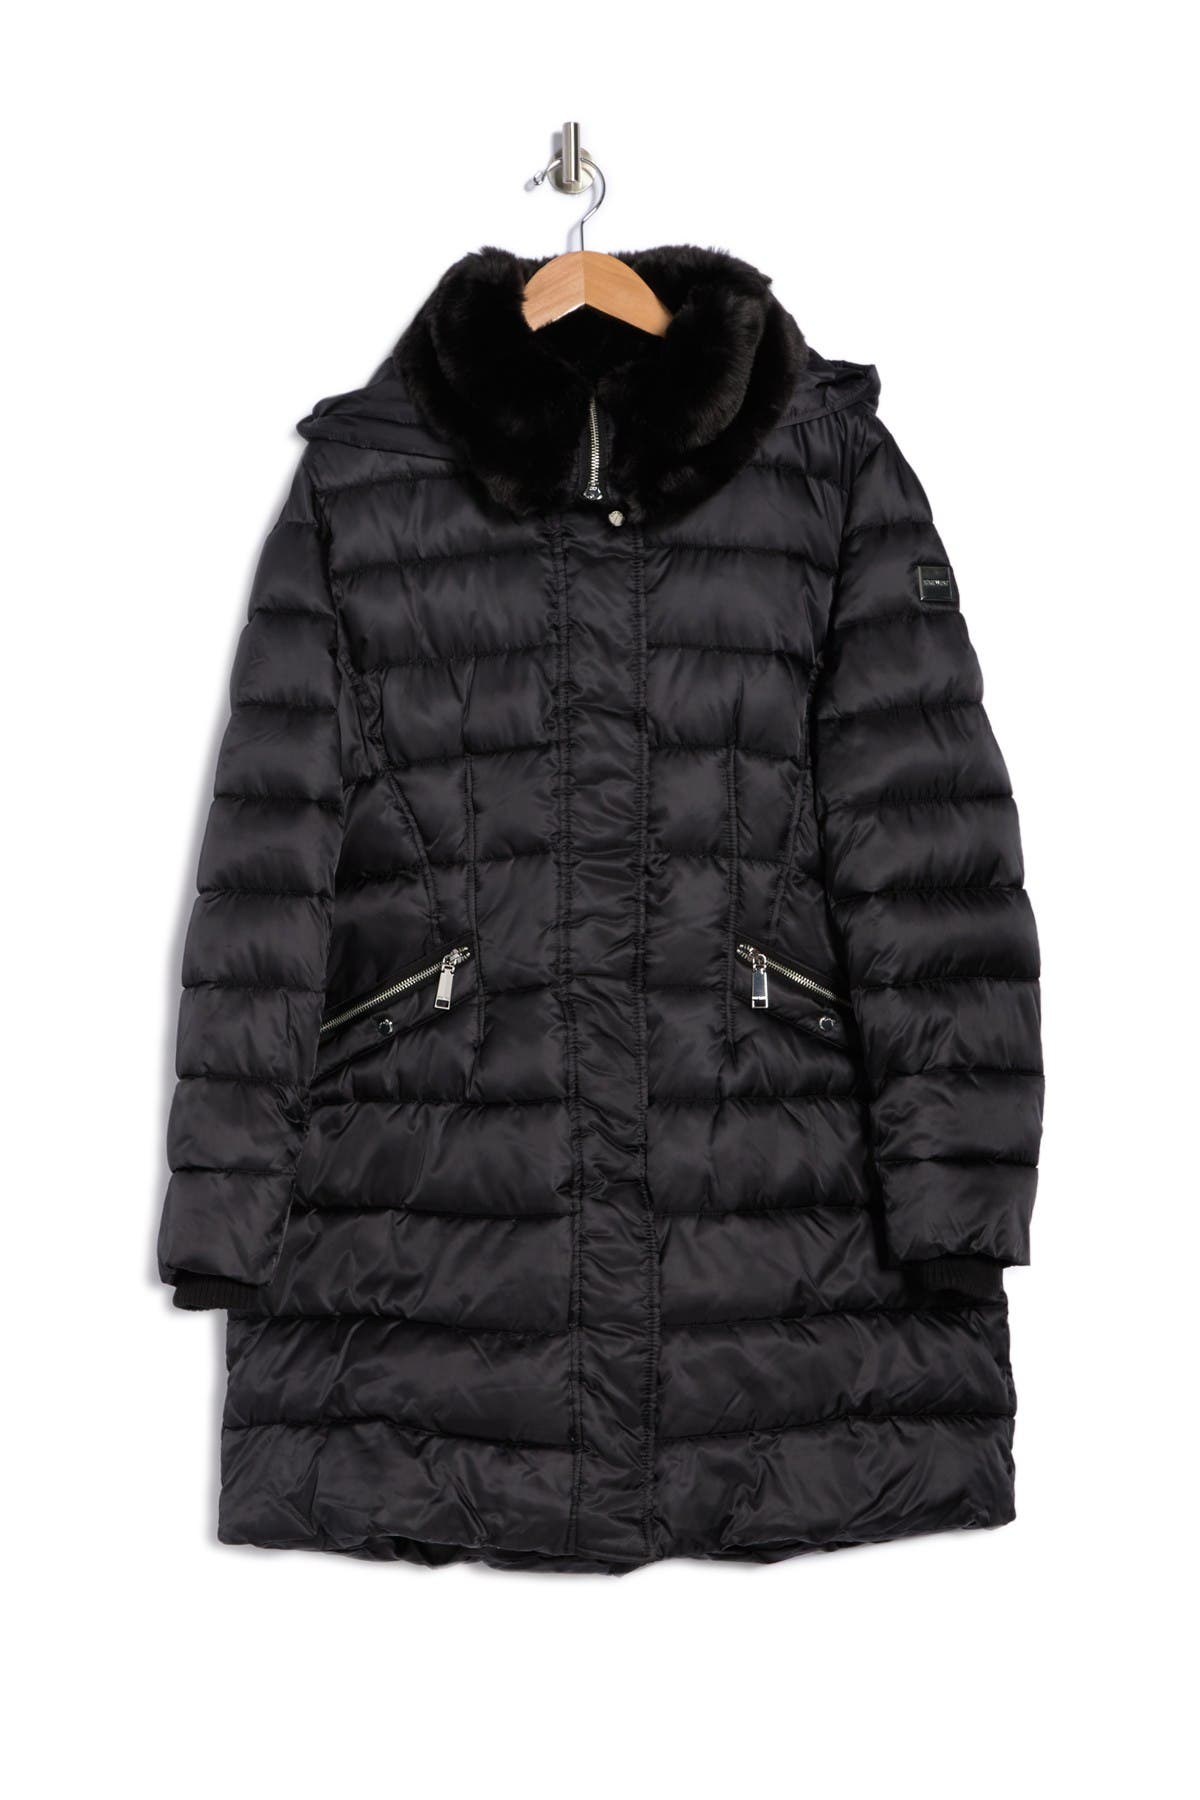 Nine West | Faux Fur Lined Hood Puffer Jacket | Nordstrom Rack